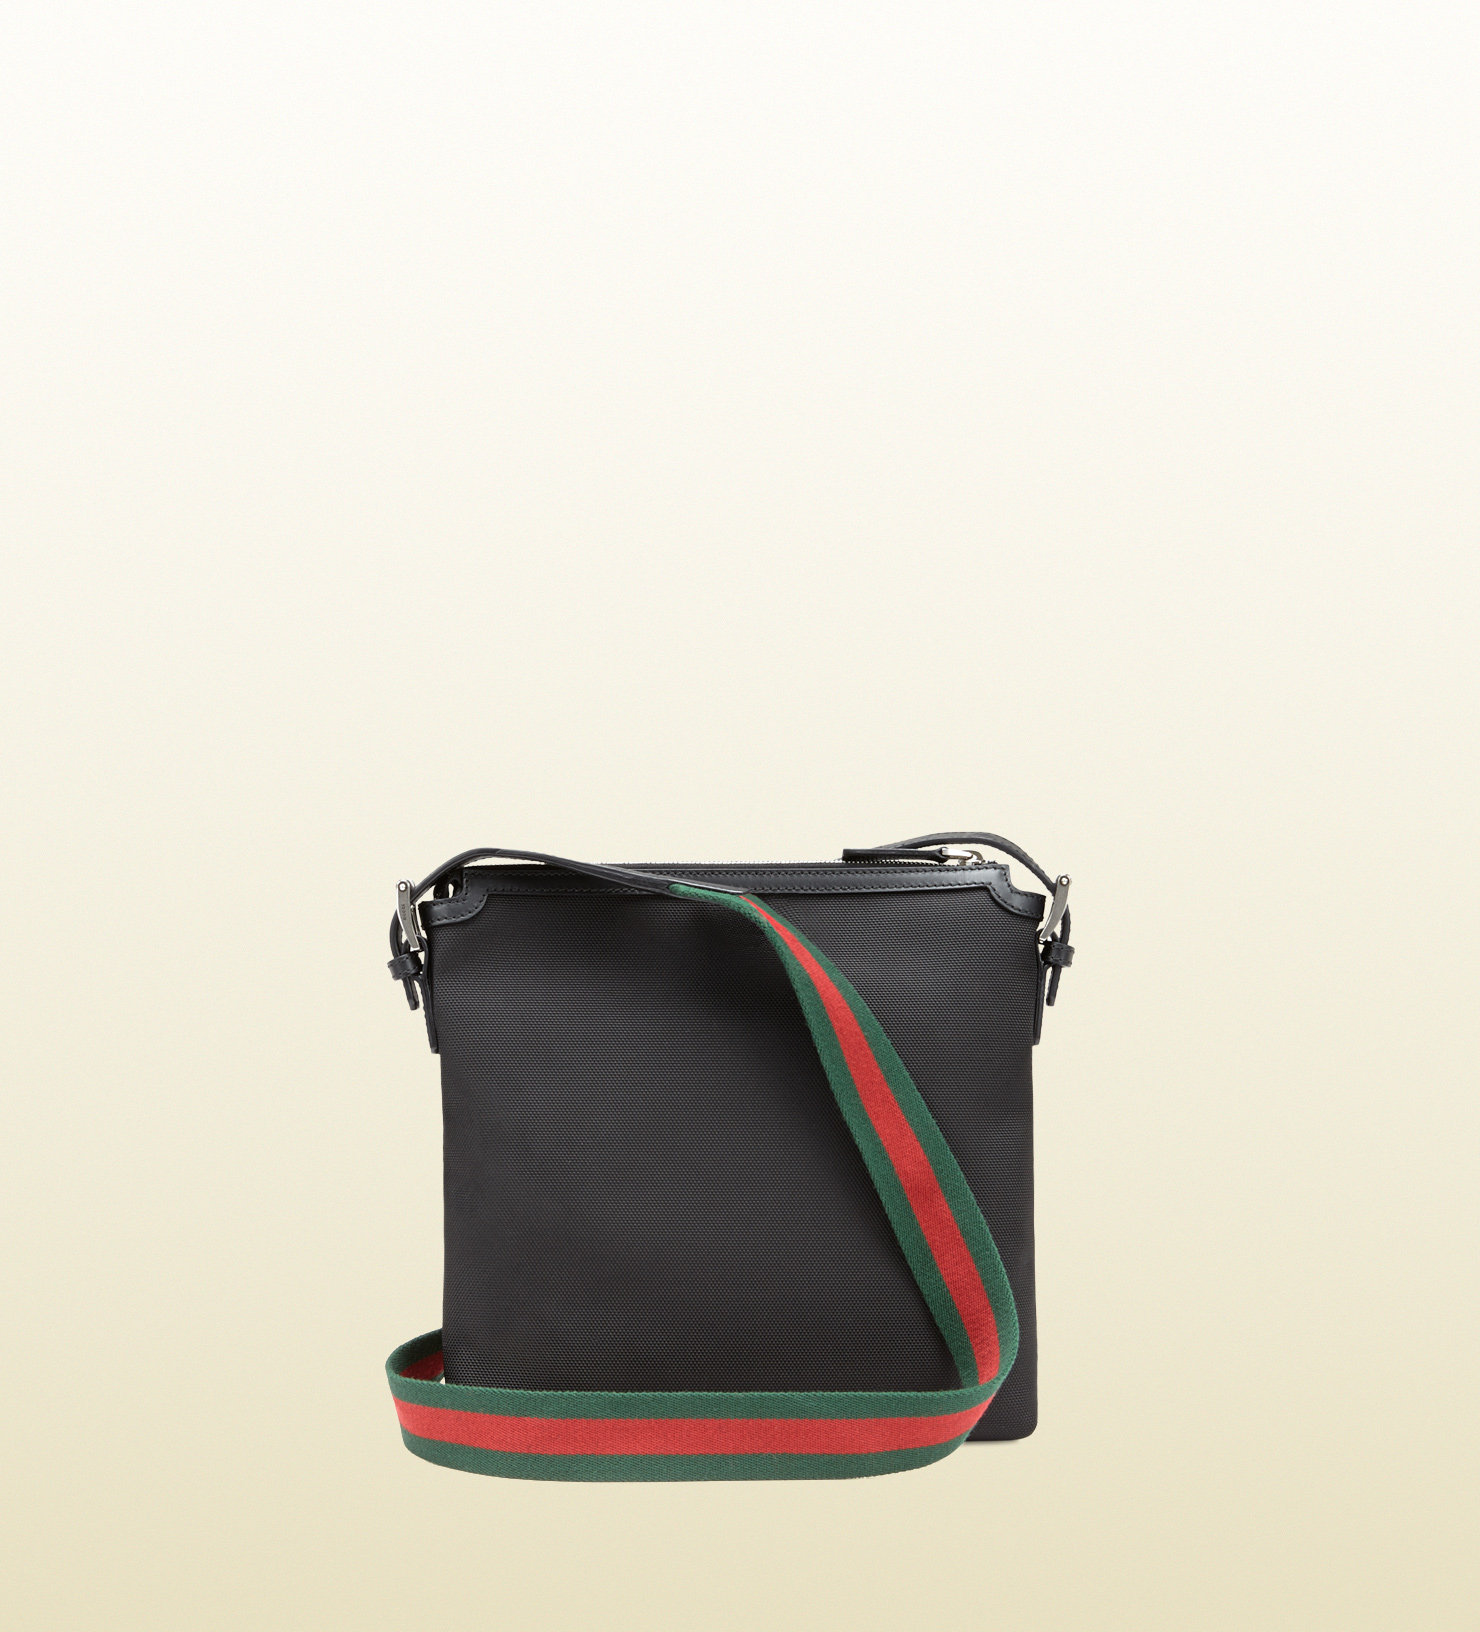 Gucci Techno Canvas Messenger Bag in Black for Men - Lyst